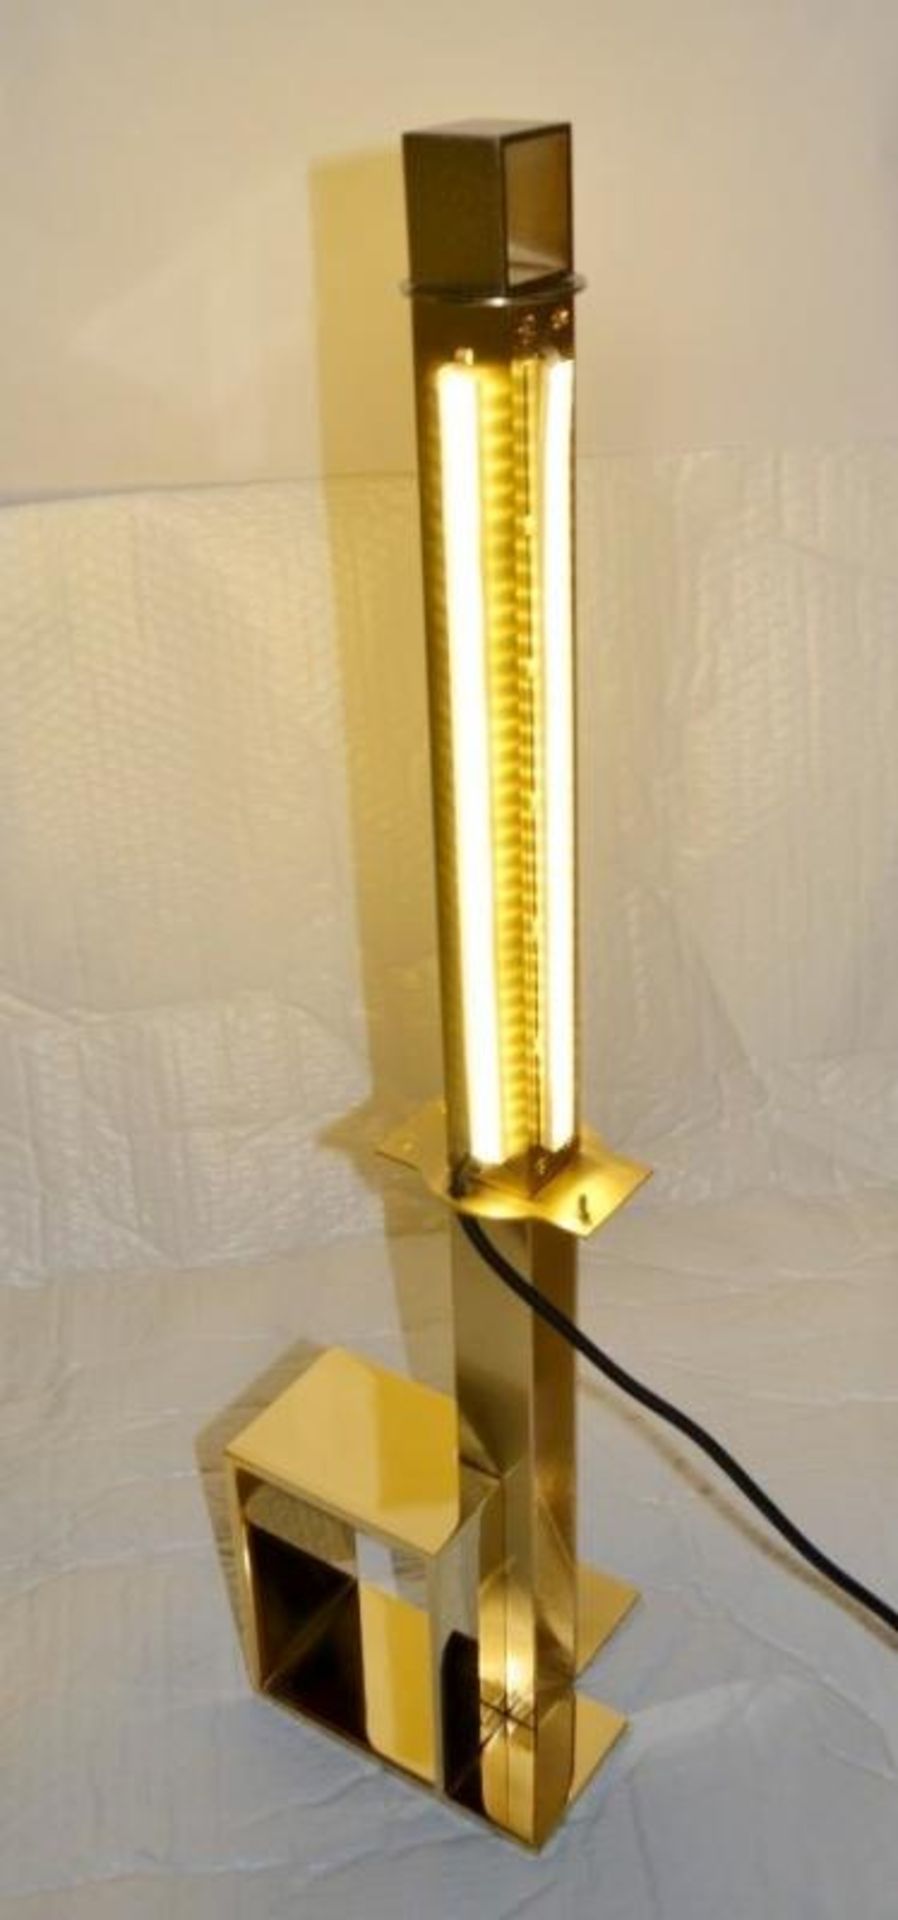 1 x FENDI CASA Chiara Bedside Lamp in Gold - Dimensions: H74 x W16 x D16cm - Ref: 4822331B - CL087 - - Image 10 of 14